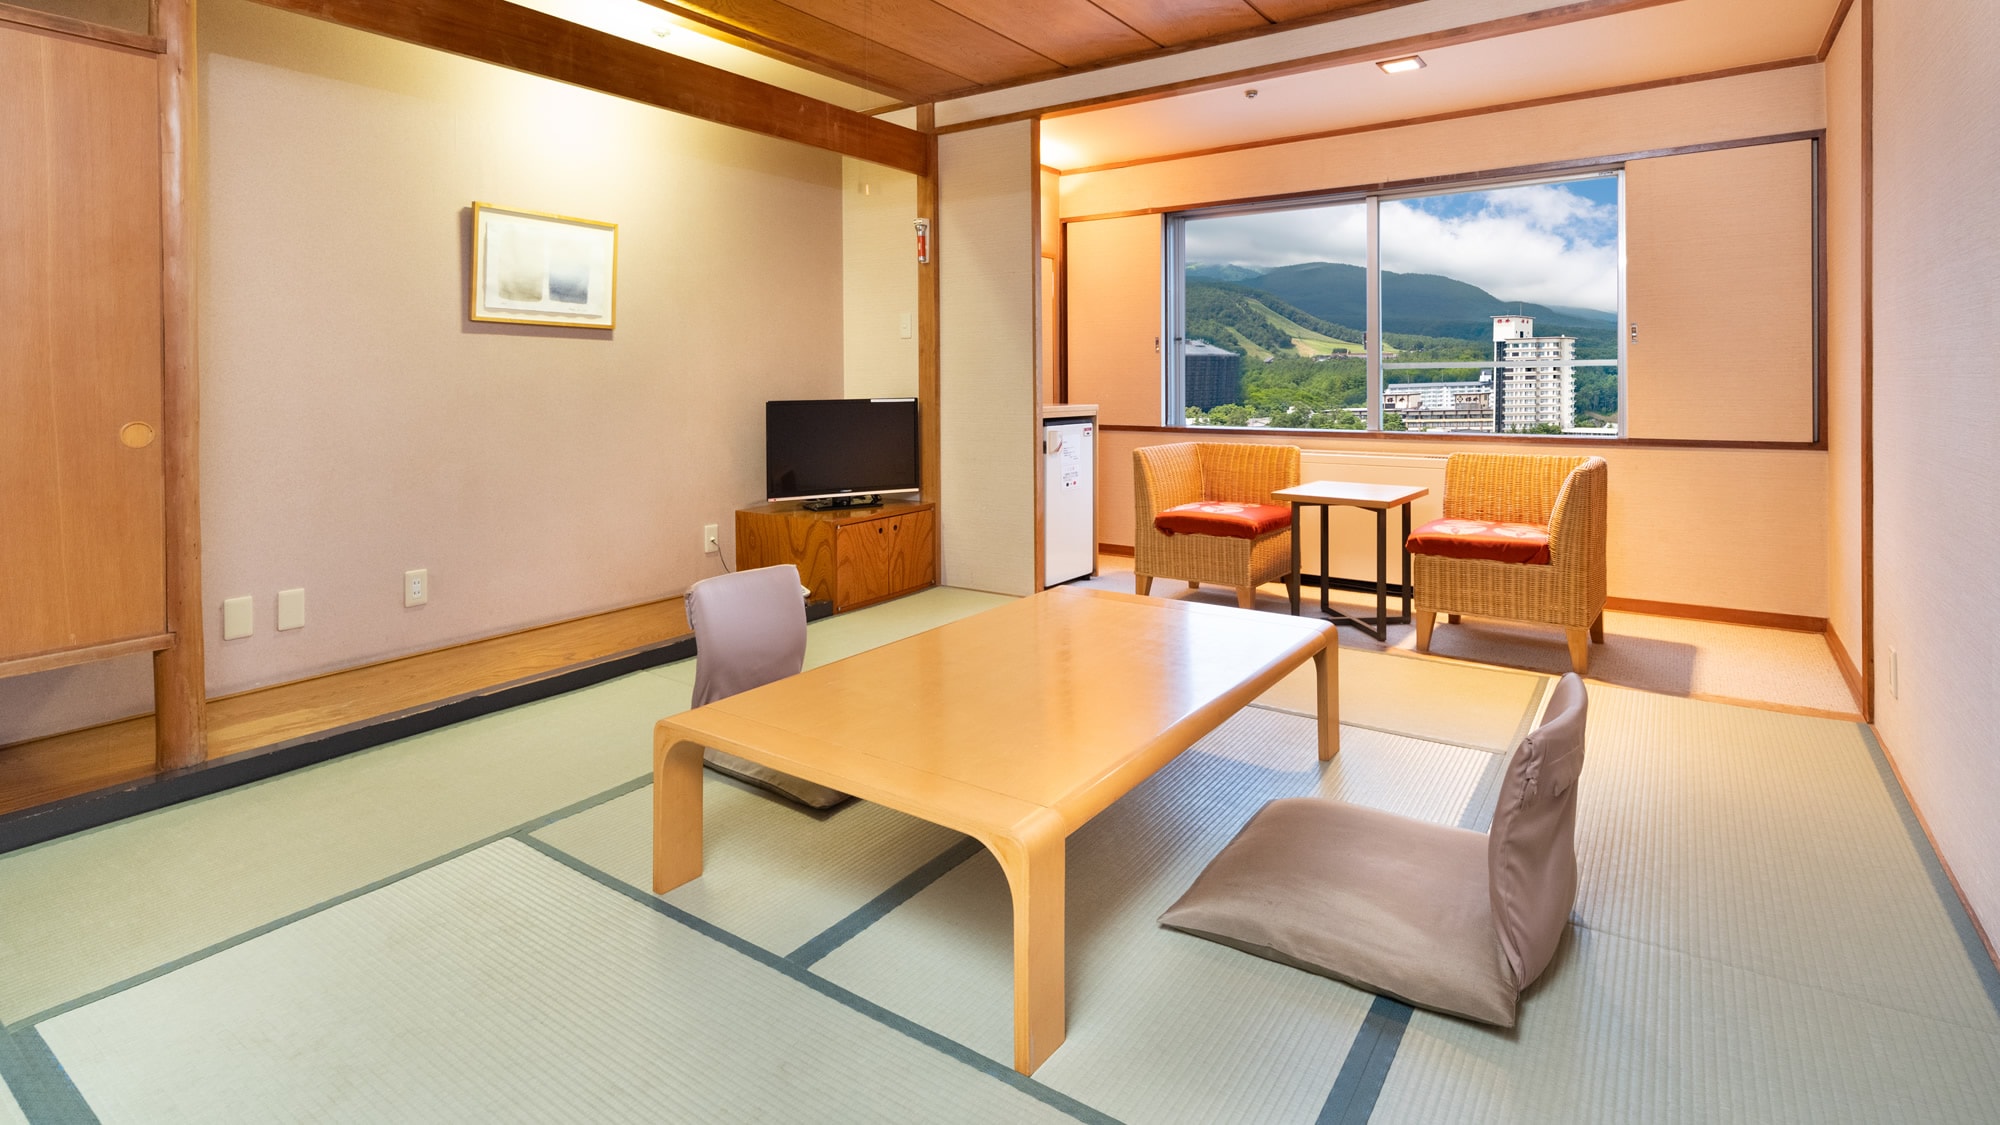 [Kamar bergaya Jepang 10 tikar tatami] Nikmati empat musim Kusatsu dari jendela sinar matahari yang cerah